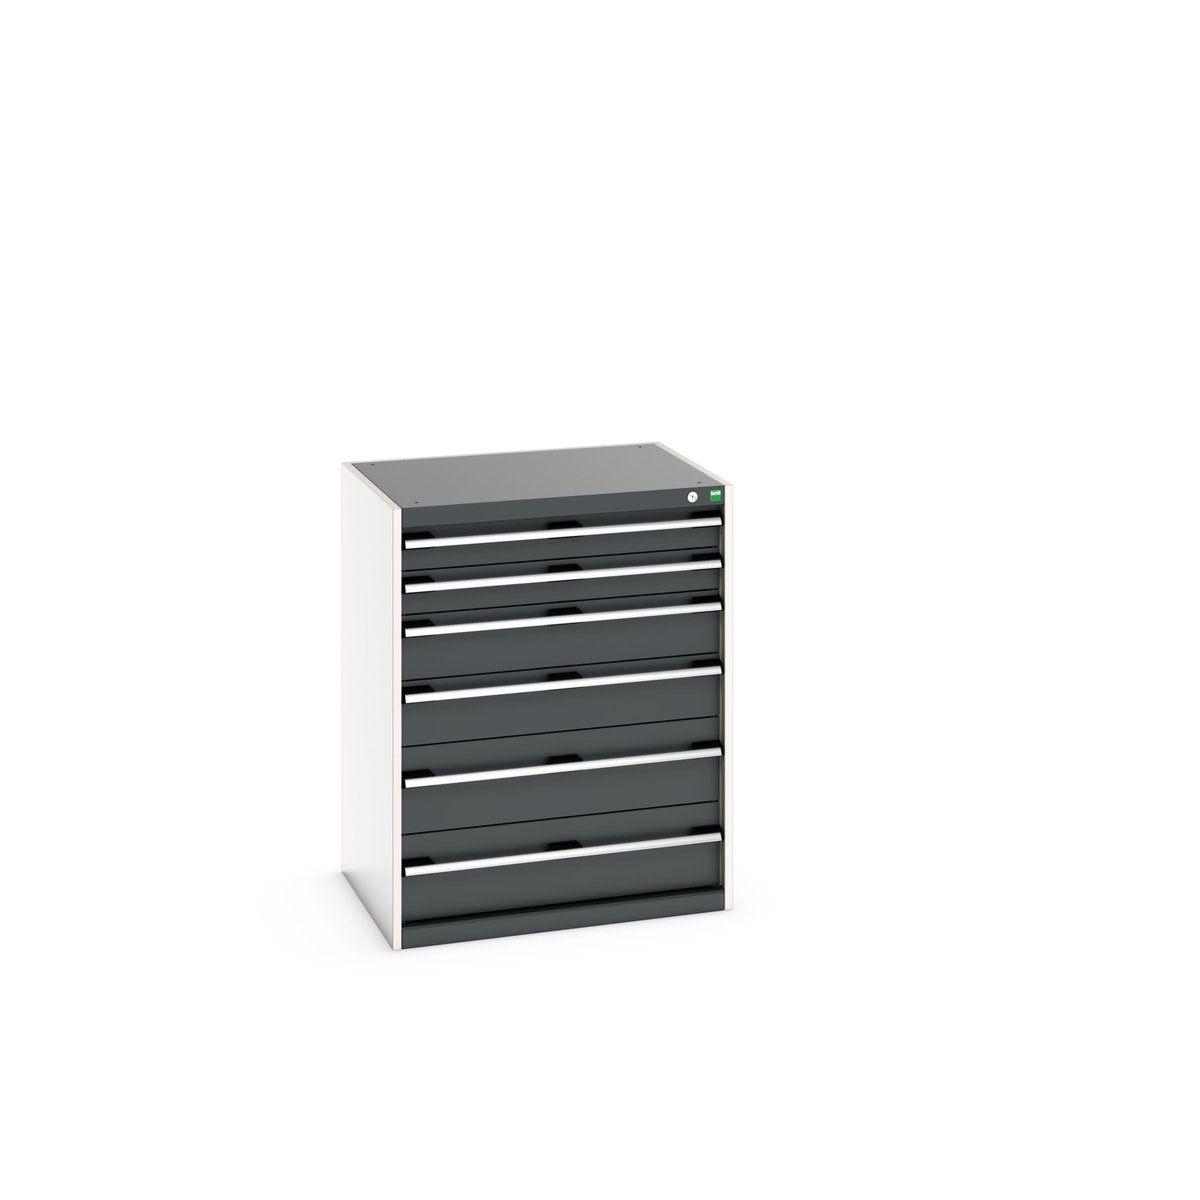 40020050. - cubio drawer cabinet